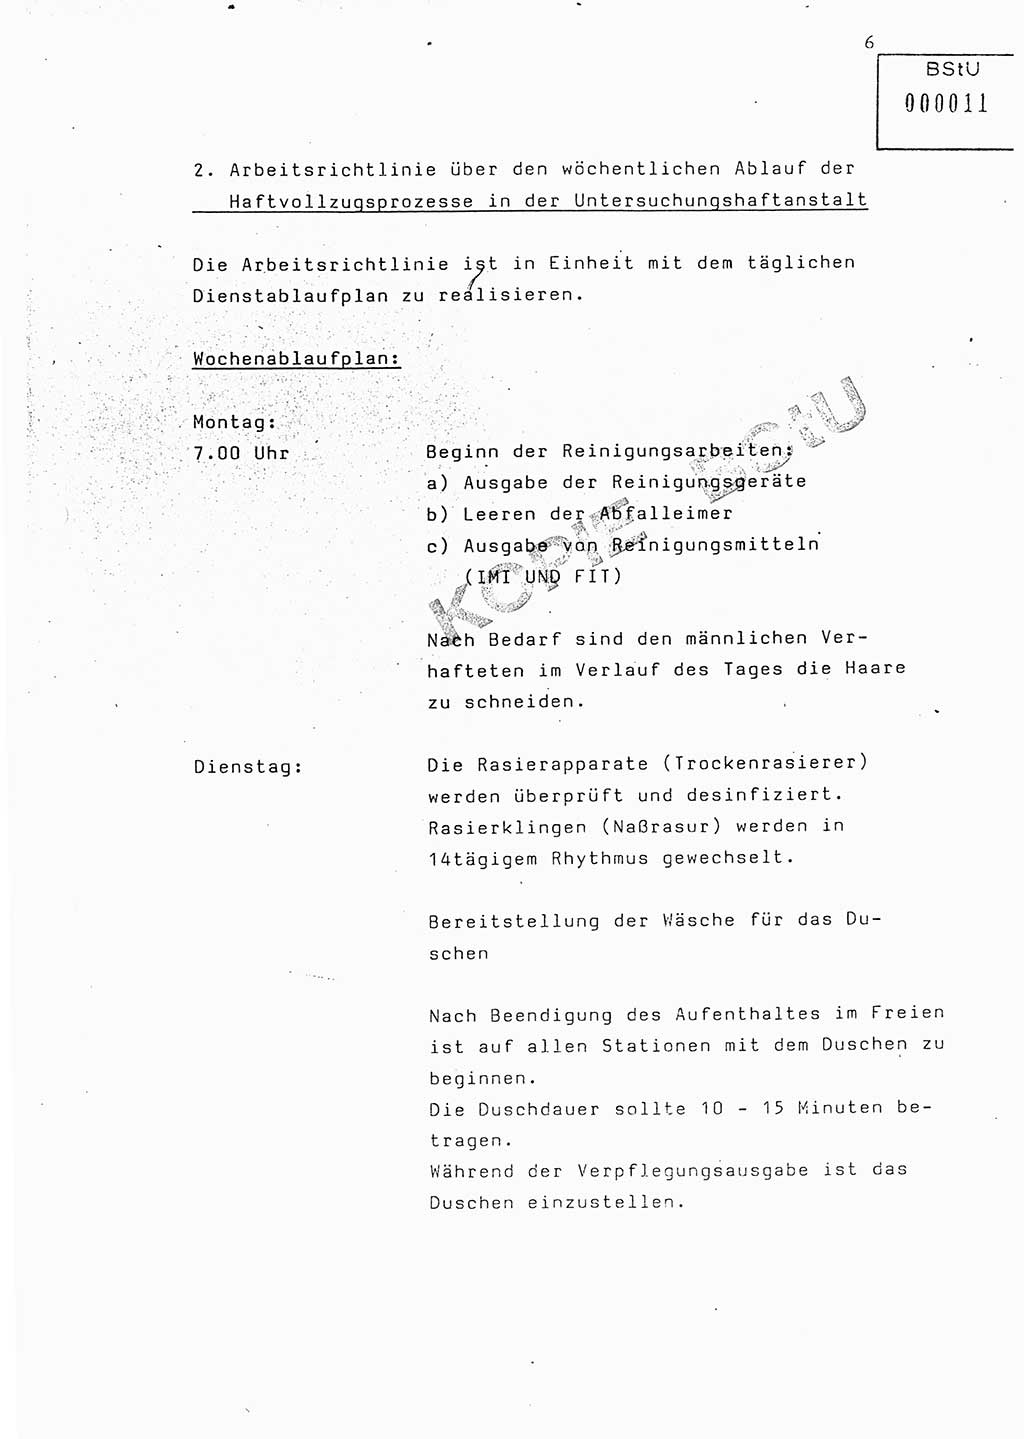 Fachschulabschlußarbeit Oberleutnant Bernd Mekelburg (Abt. ⅩⅣ/2), Oberleutnant Tilo Lilpopp (Abt. ⅩⅣ/2), Ministerium für Staatssicherheit (MfS) [Deutsche Demokratische Republik (DDR)], Abteilung ⅩⅣ, o.D., o.O, o.J., ca. 1986 wg. Bez. DA 1/86, Seite 6 (FS-Abschl.-Arb. MfS DDR Abt. ⅩⅣ 1986, S. 6)